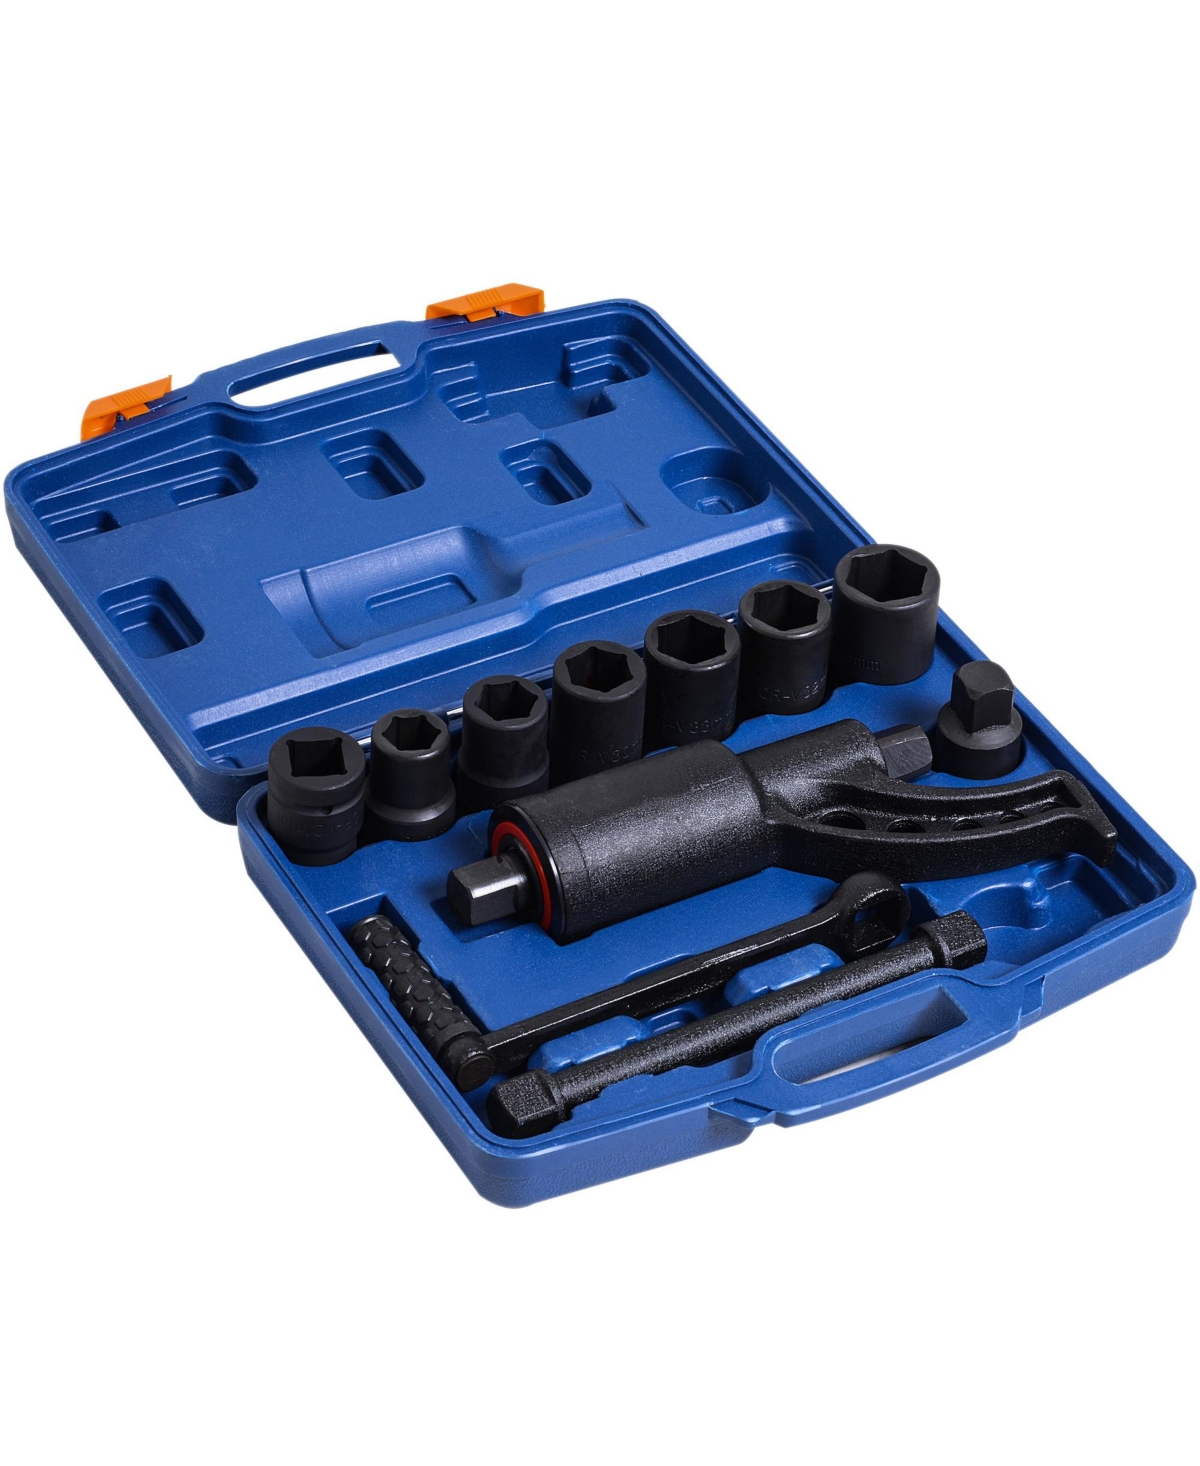 Heavy Duty Torque Multiplier Wrench Set 7pcs Socket Lug Nut Remover - Blue